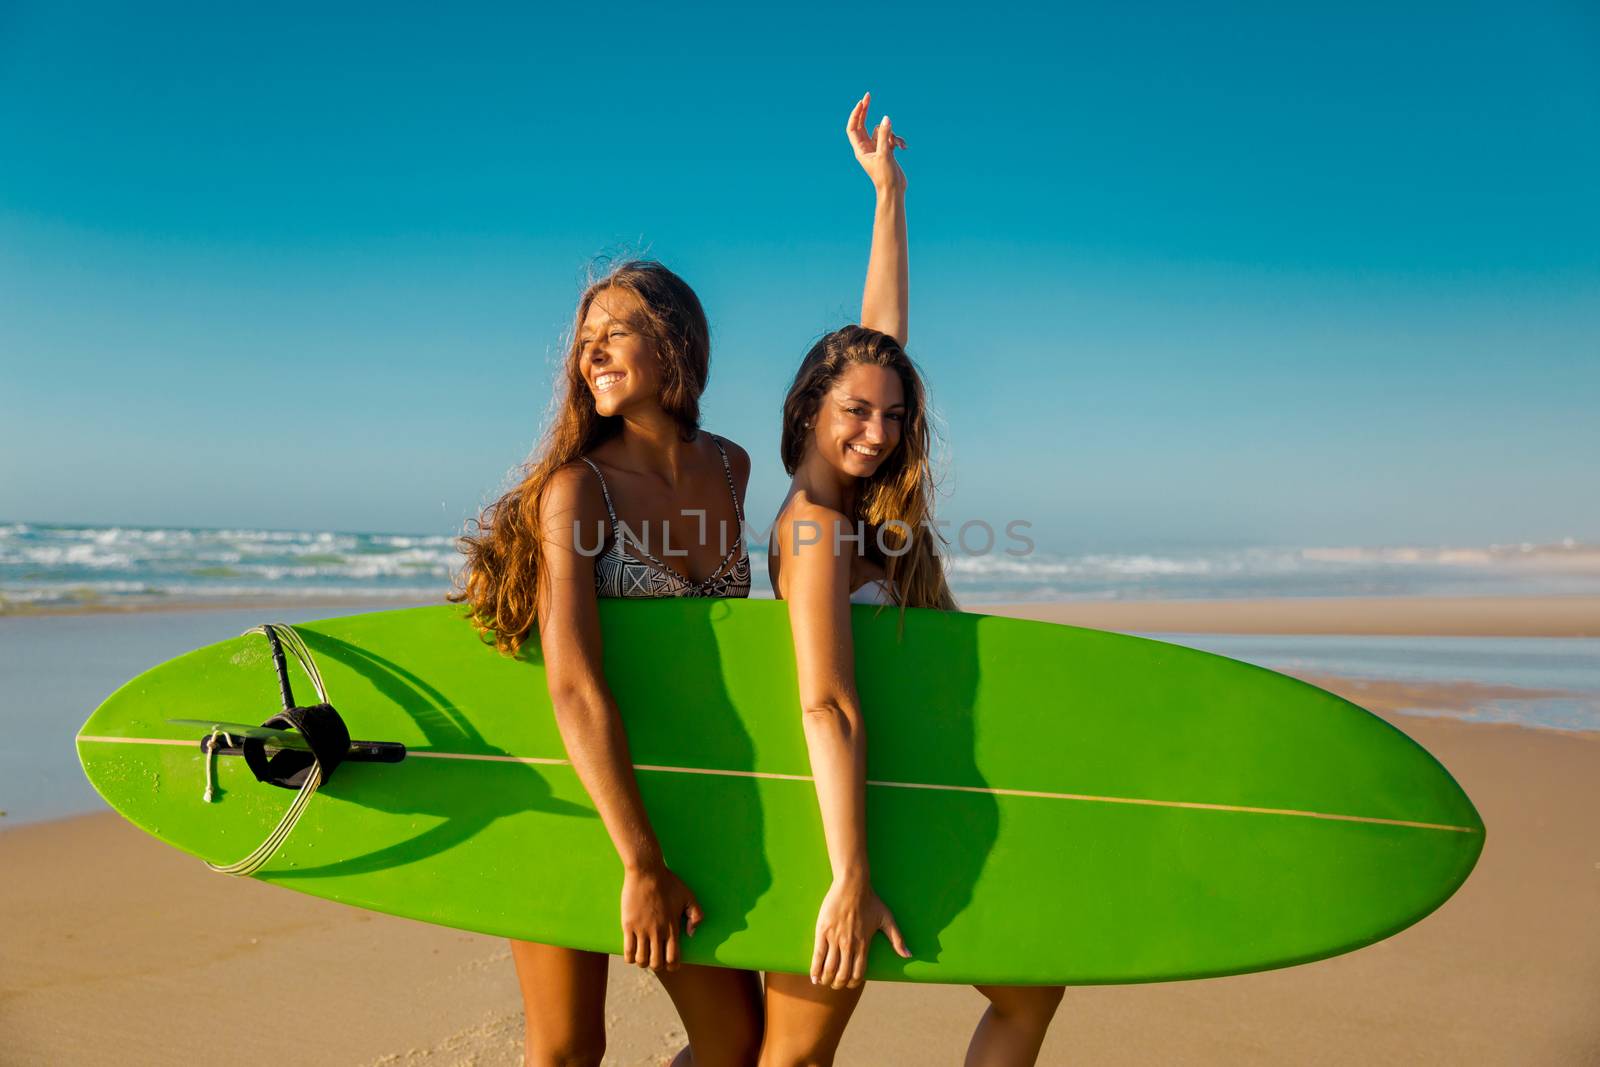 We love surf by Iko